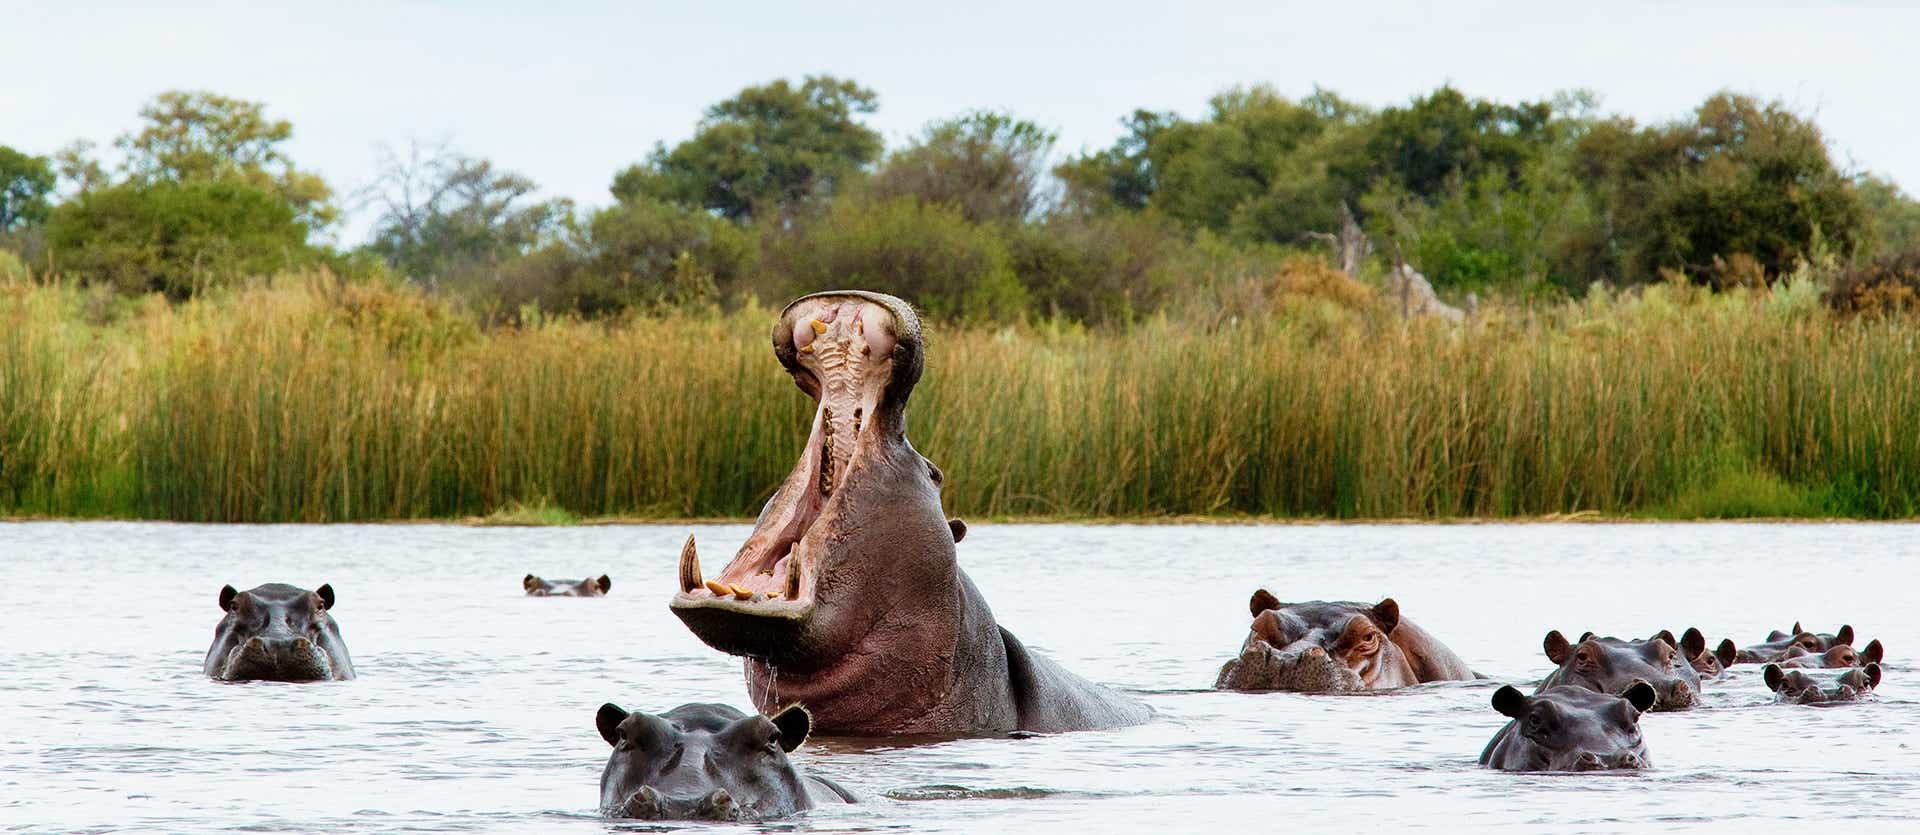 Chobe National Park <span class="iconos separador"></span> Botswana